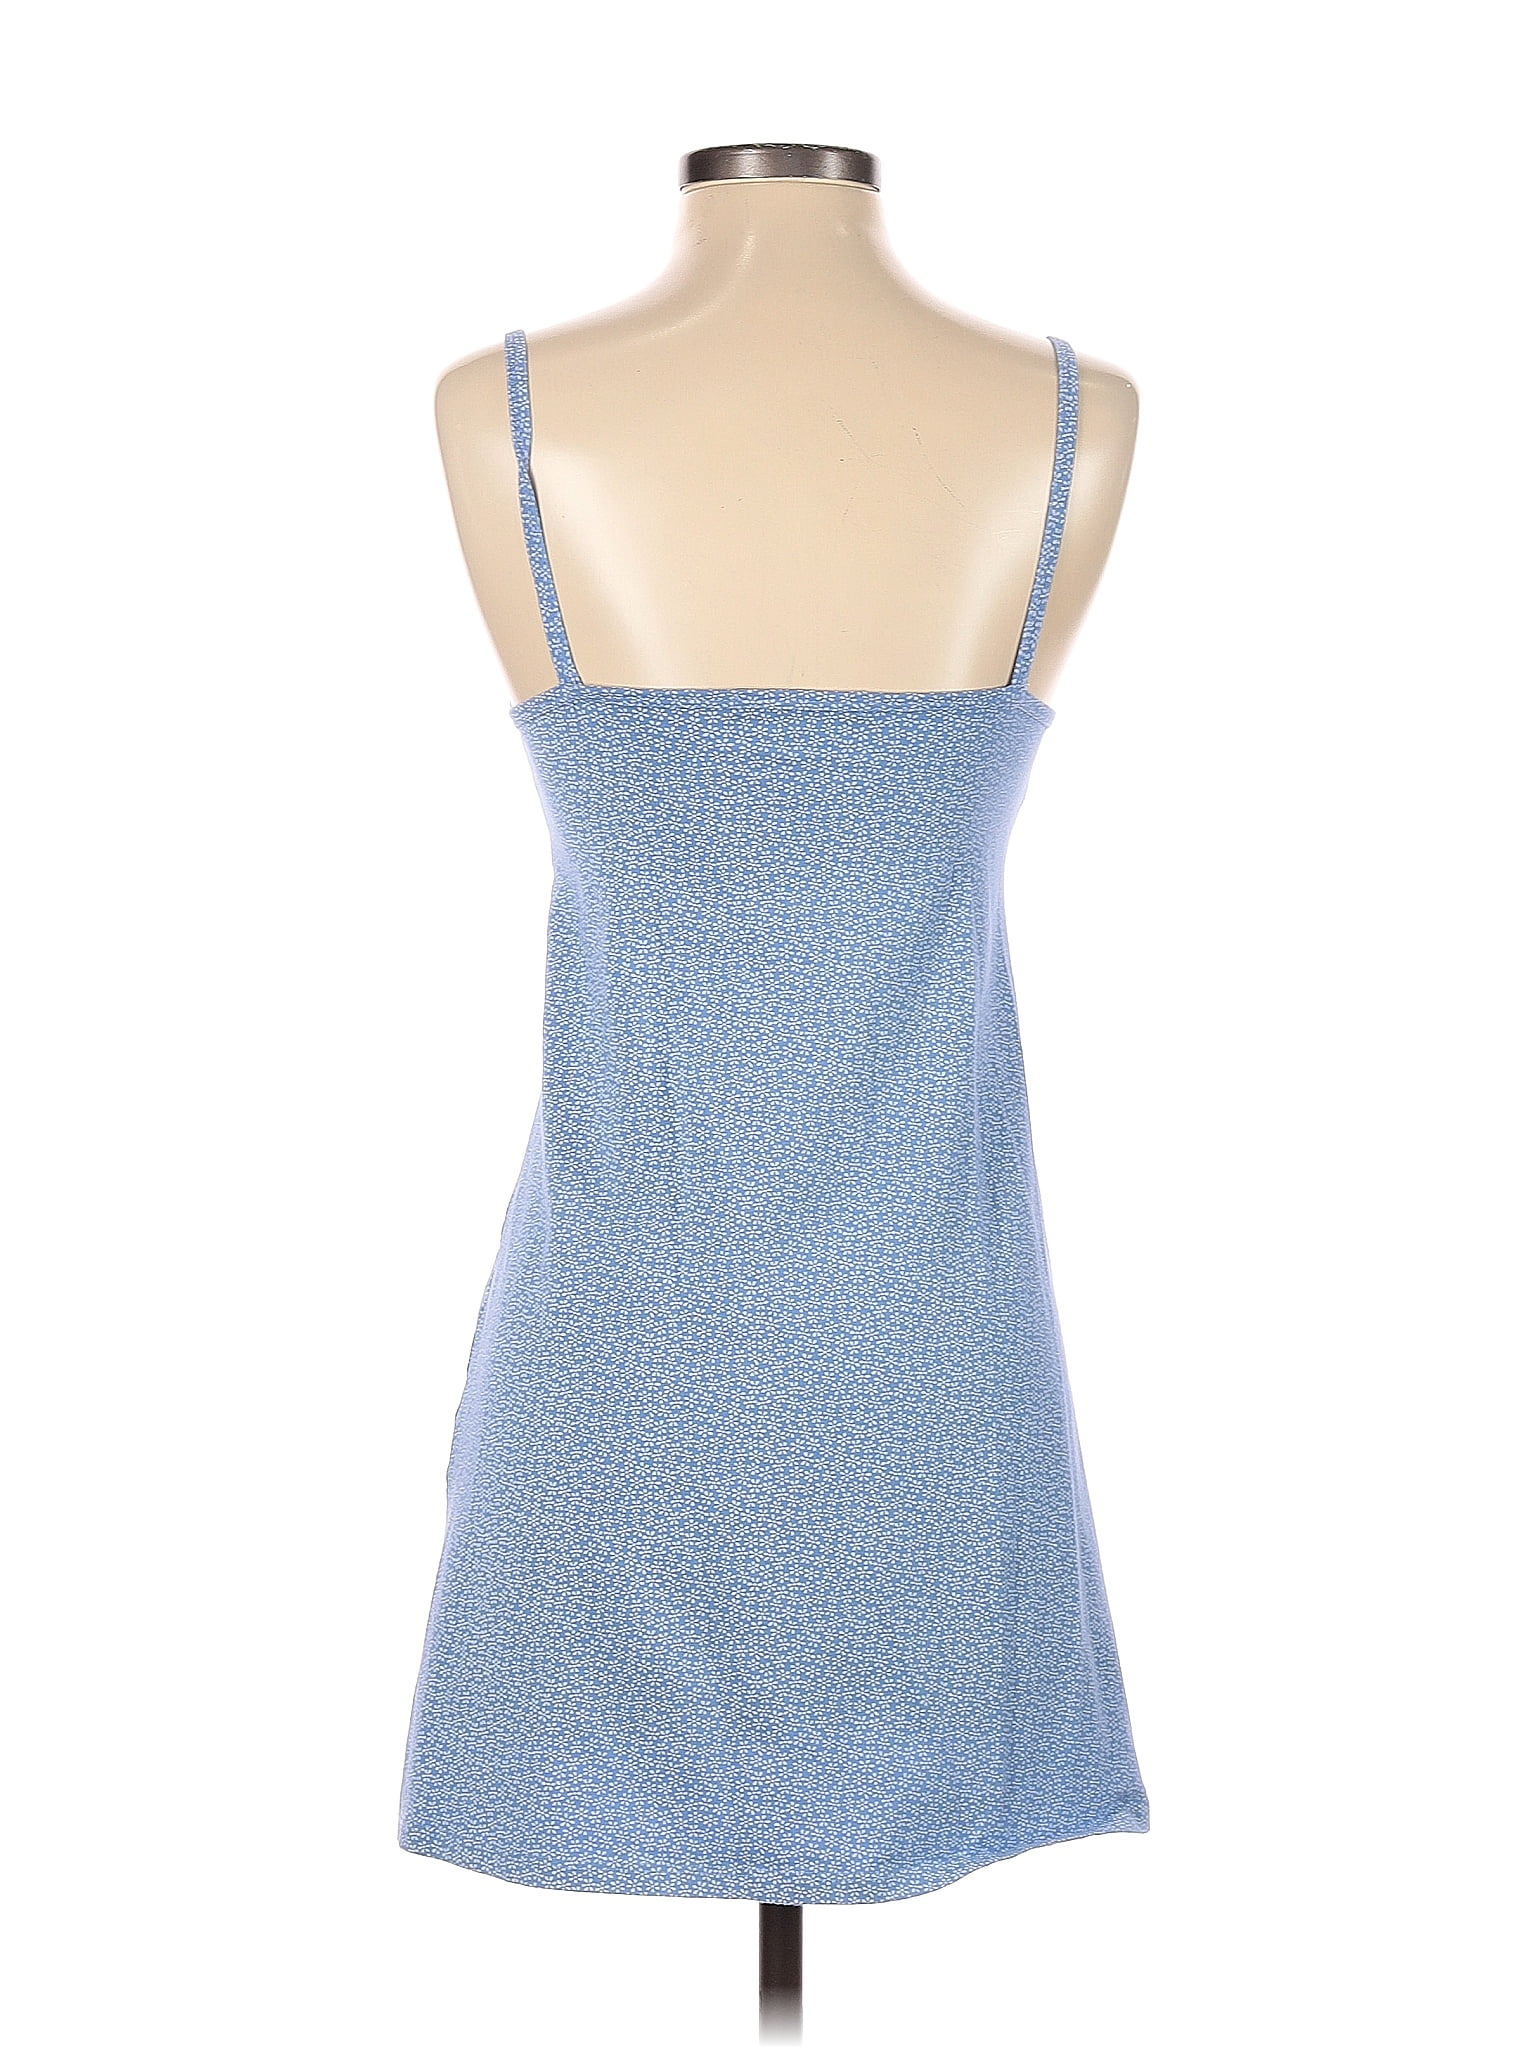 Brandy Melville Blue Casual Dress Size Sm (Estimated) - 55% off